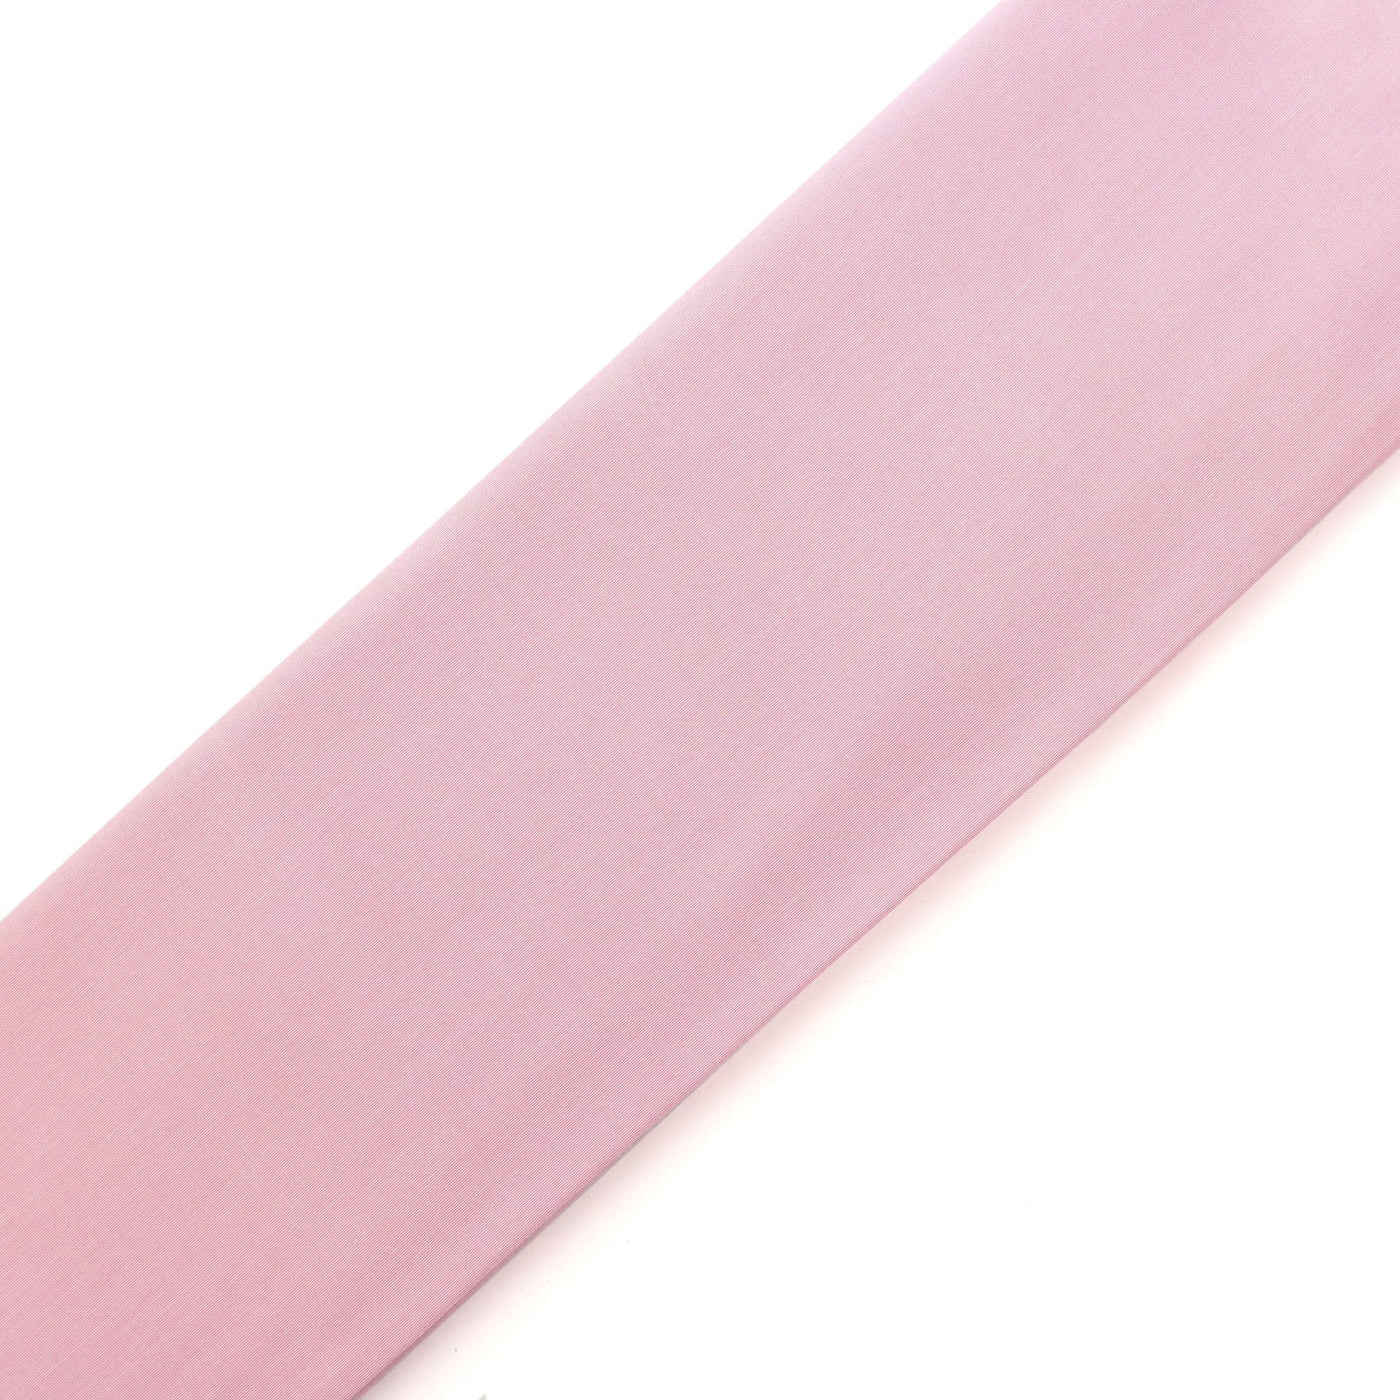 Fabric Pandit Cut Piece (CUT PIECE) Pastel Pink Cotton Yarn Dyed Fabric (Width 58 inch)